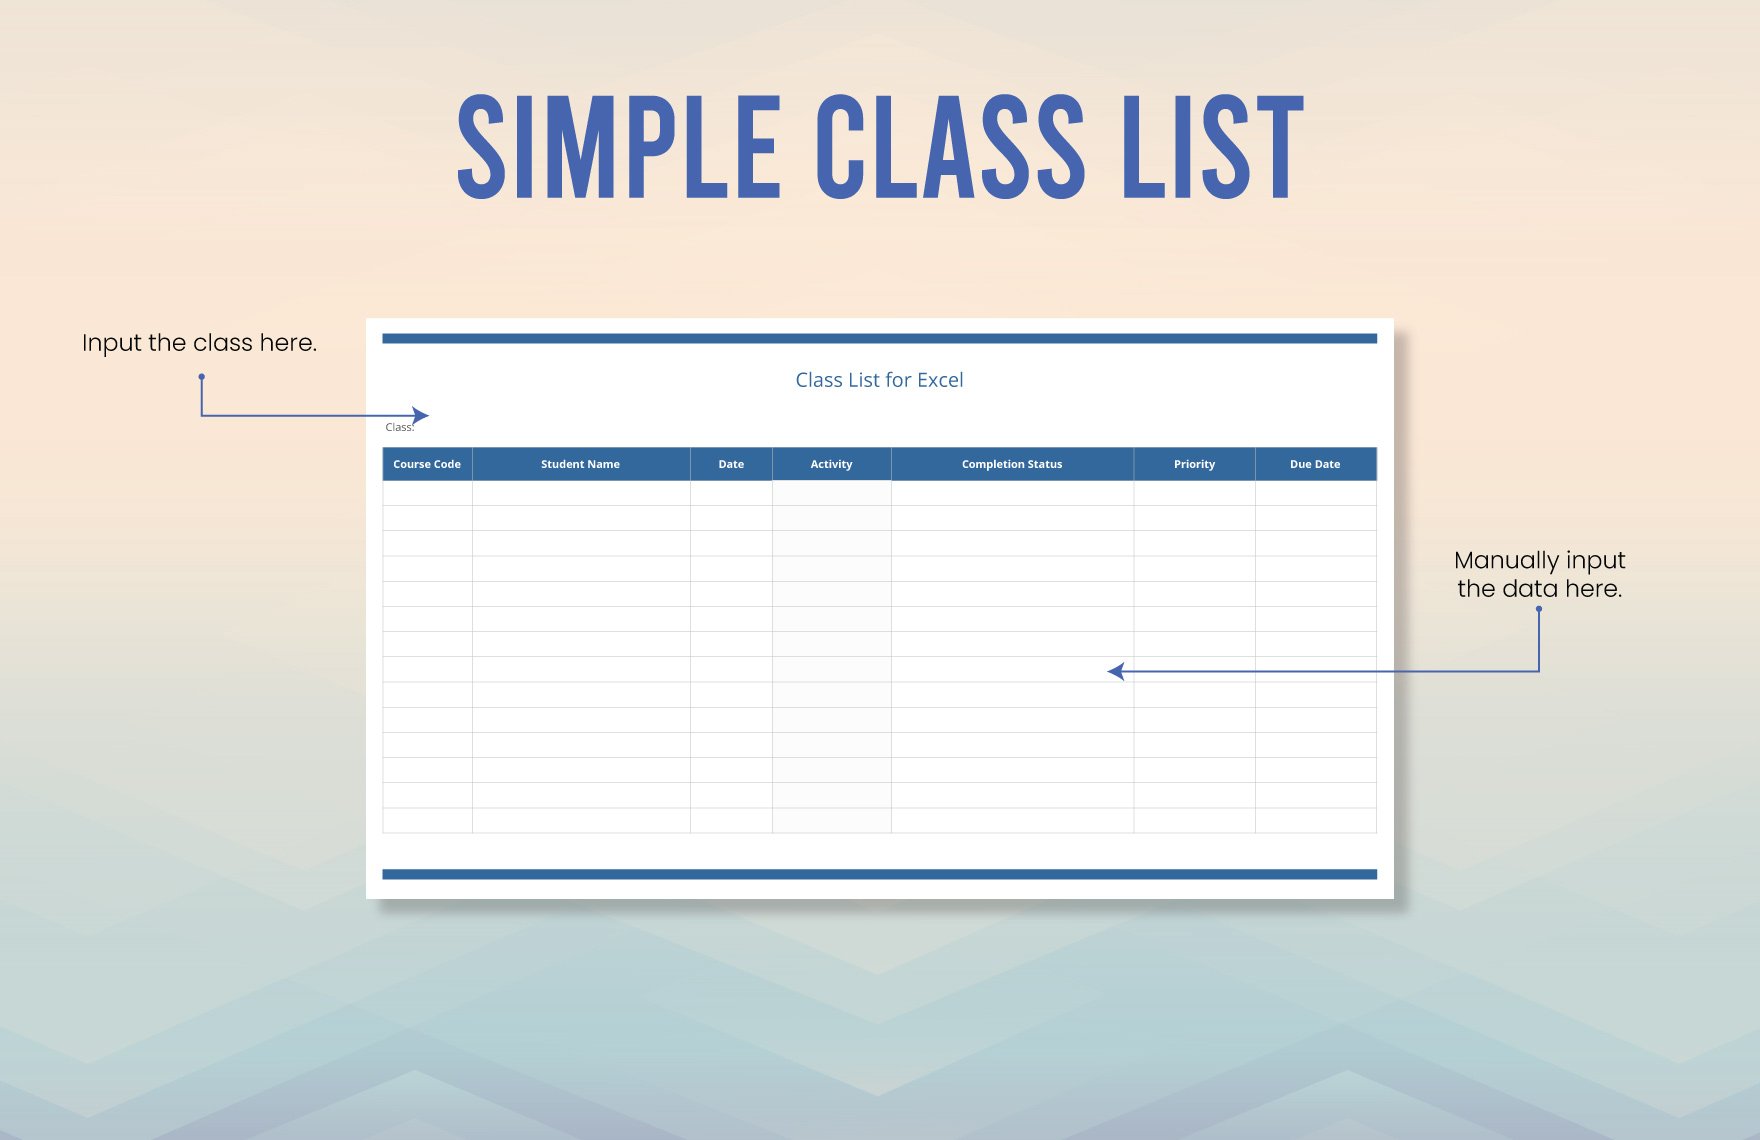 Simple Class List Template